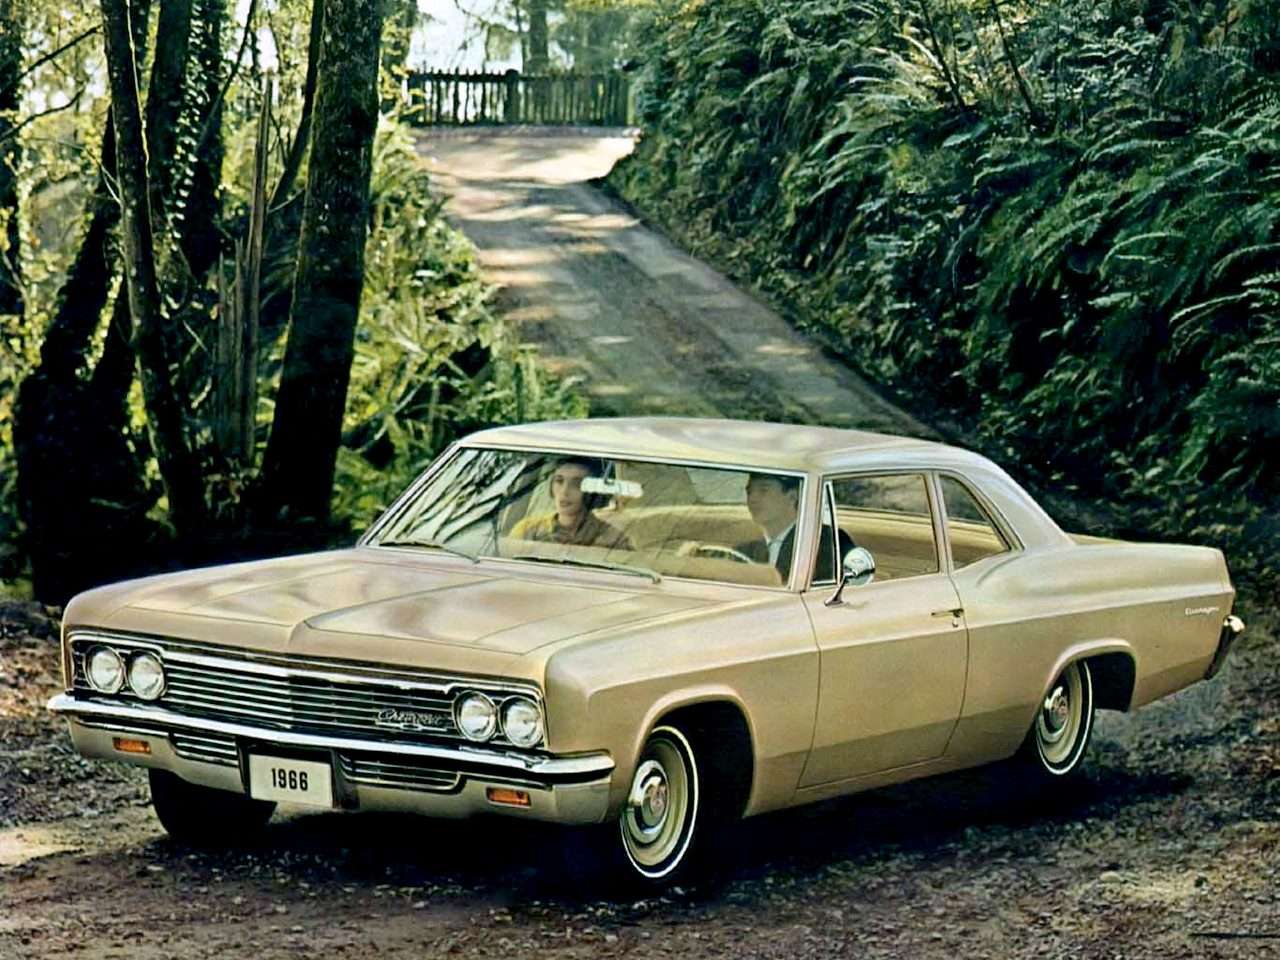 2-дверний седан Chevrolet Biscayne 1966 року випуску онлайн пазл